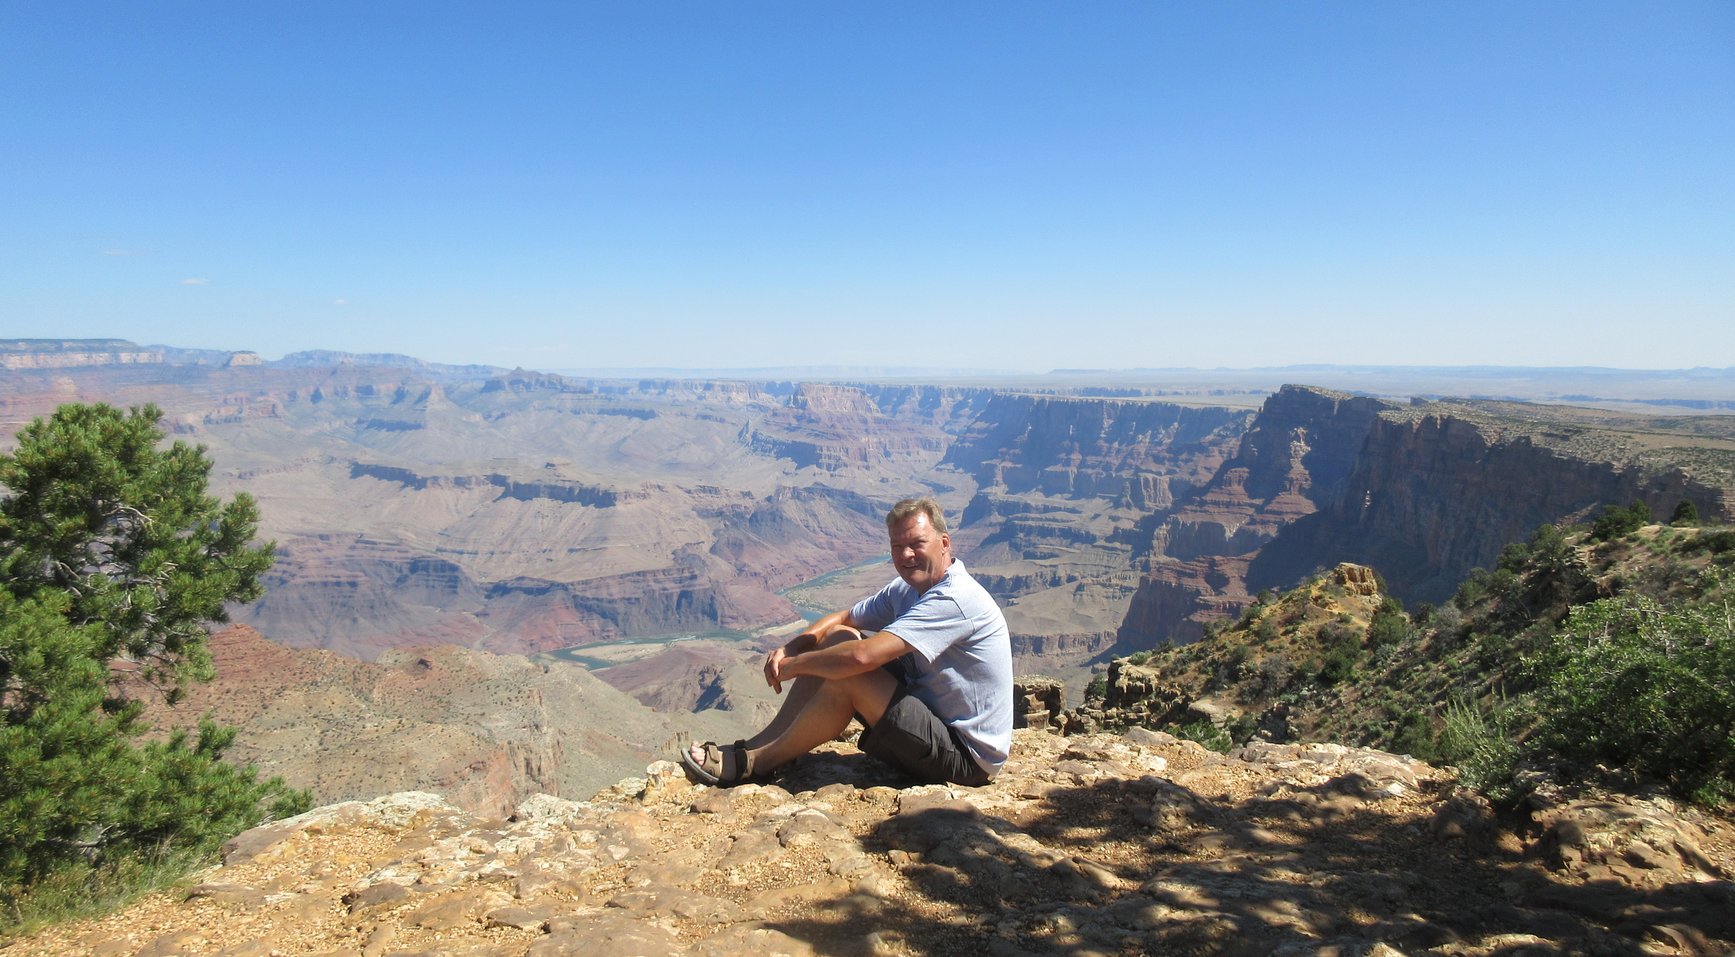 Anders Dandanell Skjødt, Grand Canyon, Arizona, USA. 2019.